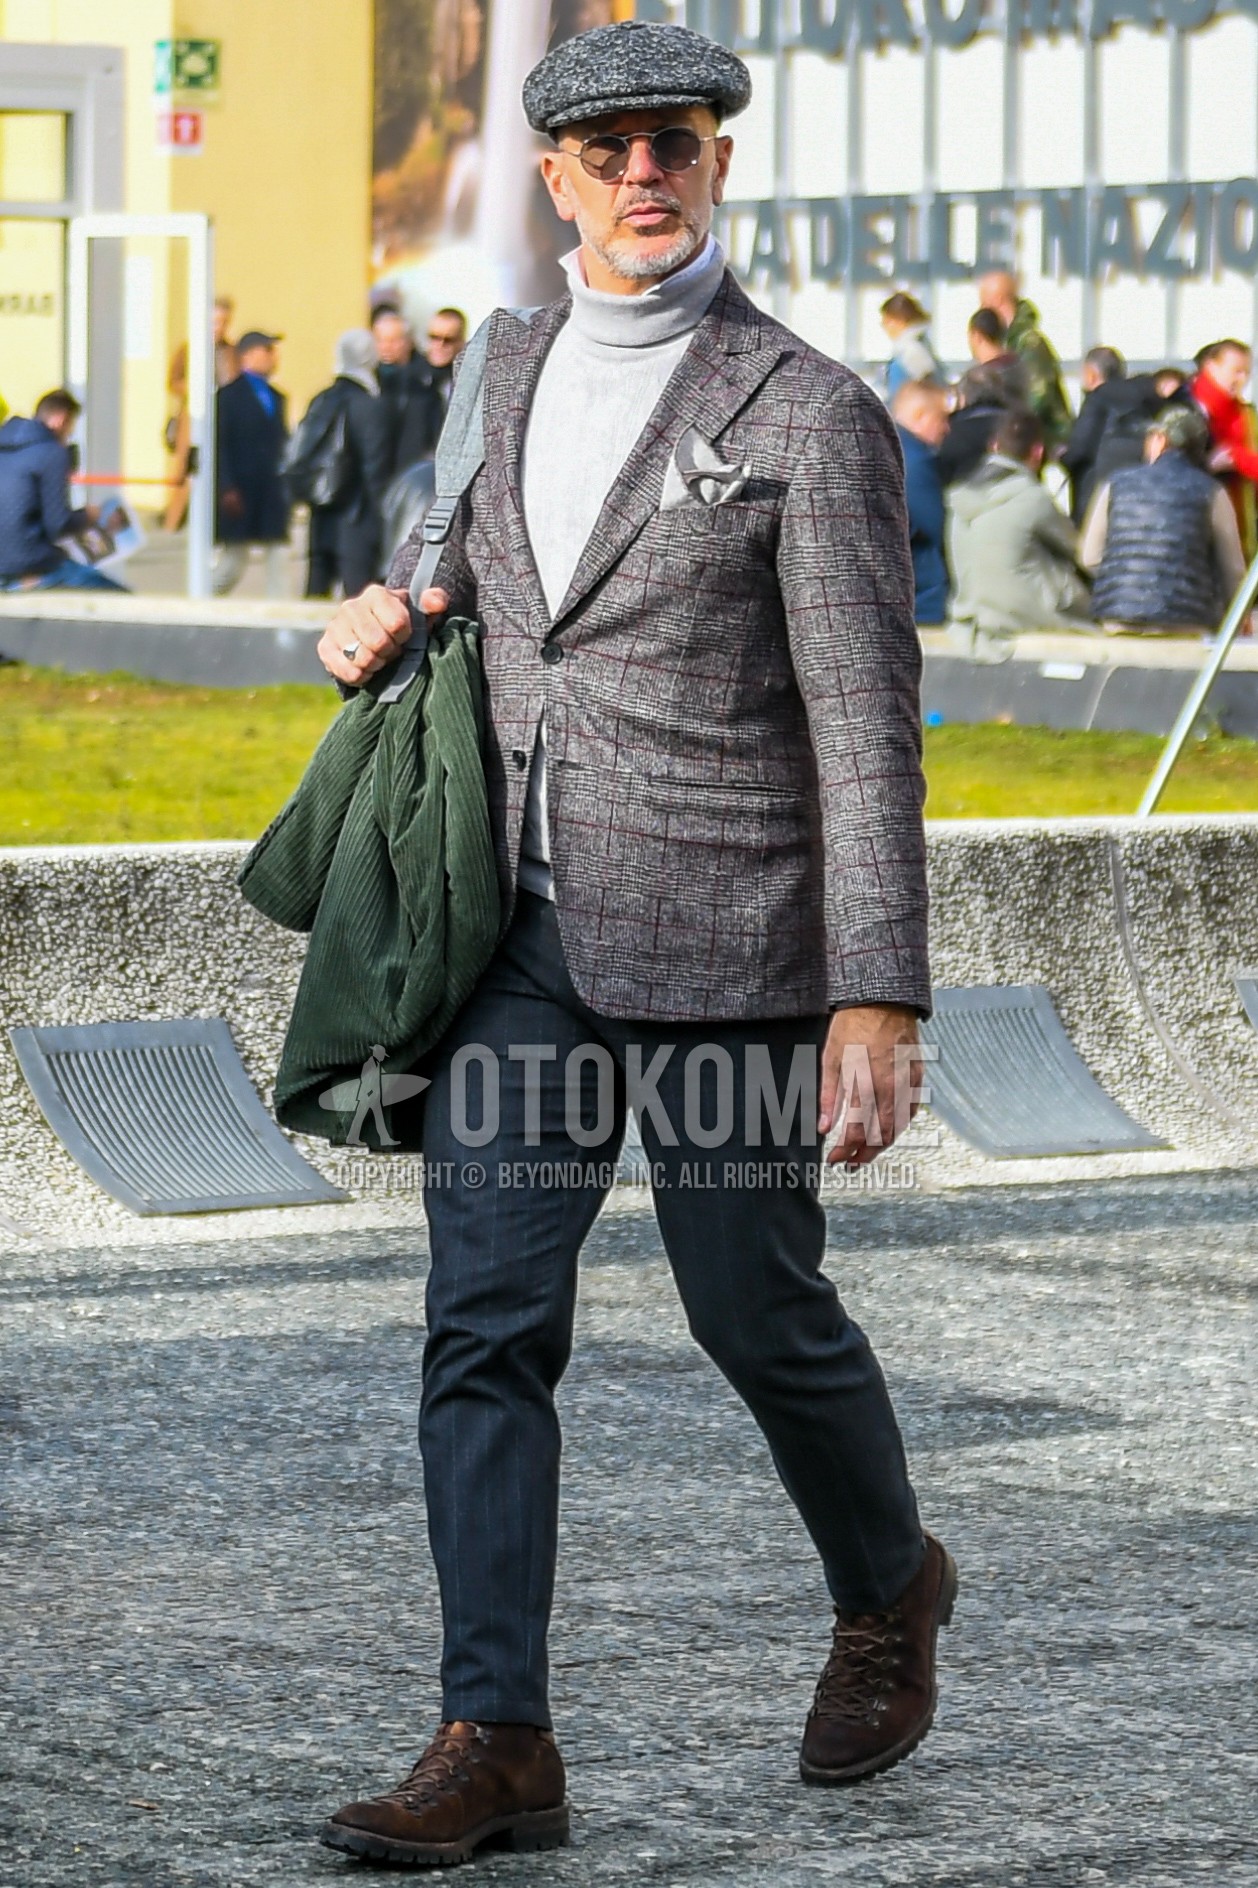 Men's autumn winter outfit with gray plain cap, plain sunglasses, gray check tailored jacket, gray plain turtleneck knit, dark gray plain slacks, brown  boots.